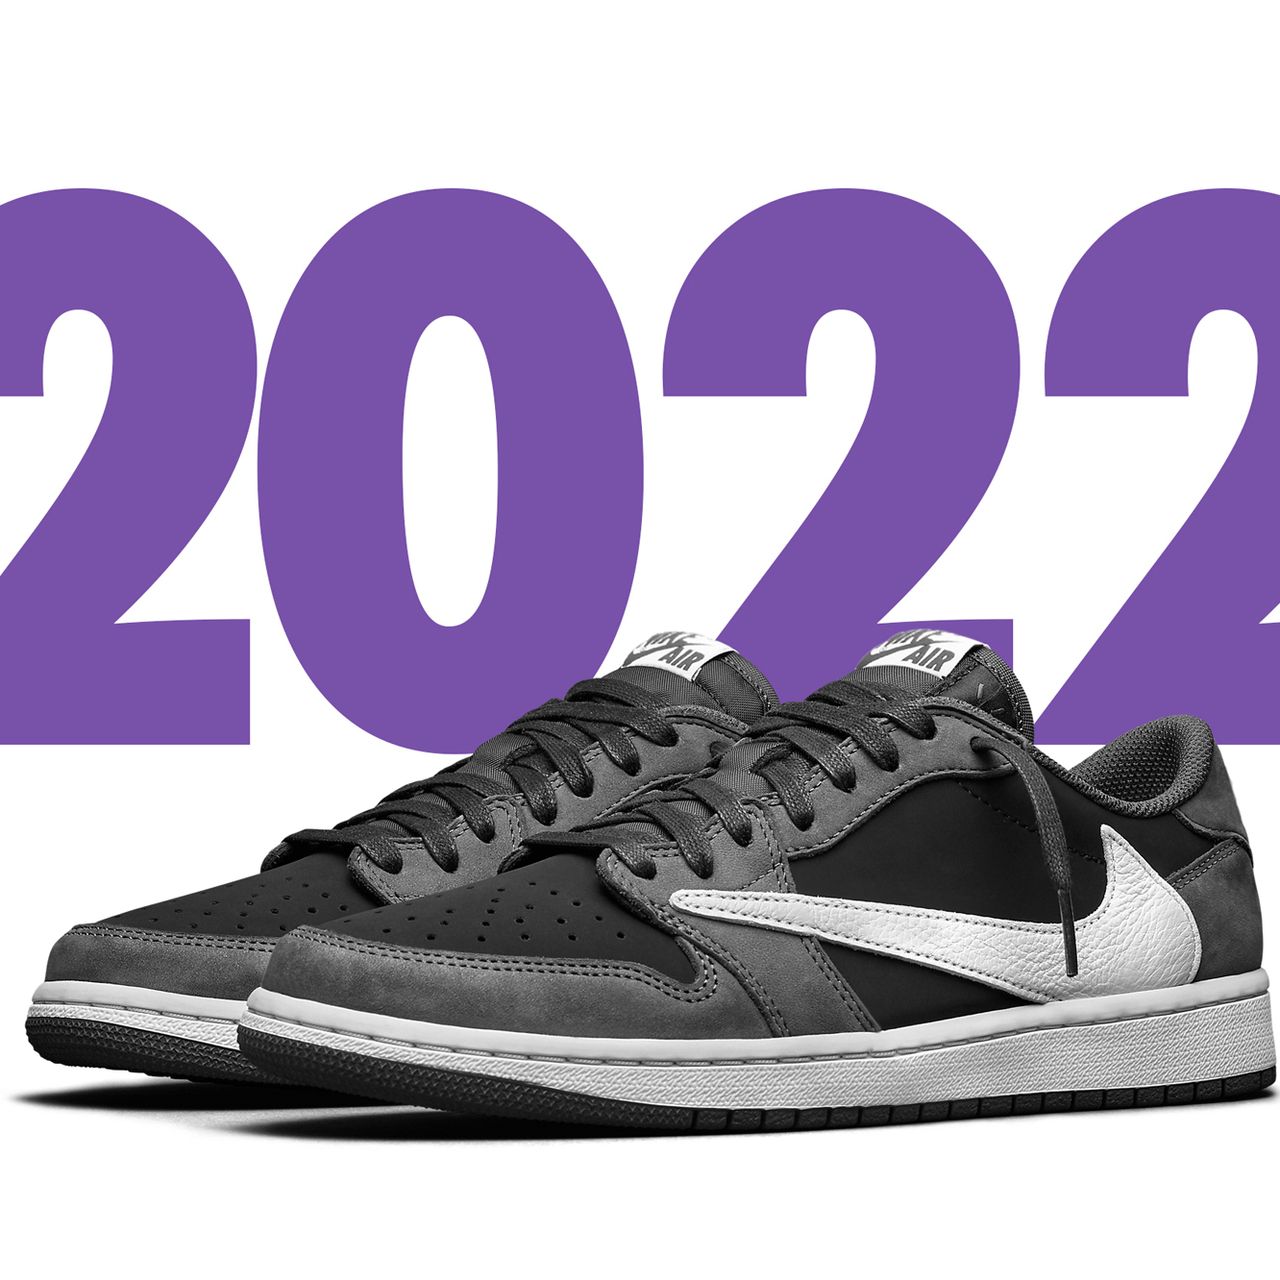 Sneakers We're Already Looking Forward To in 2022 - Sneaker Freaker